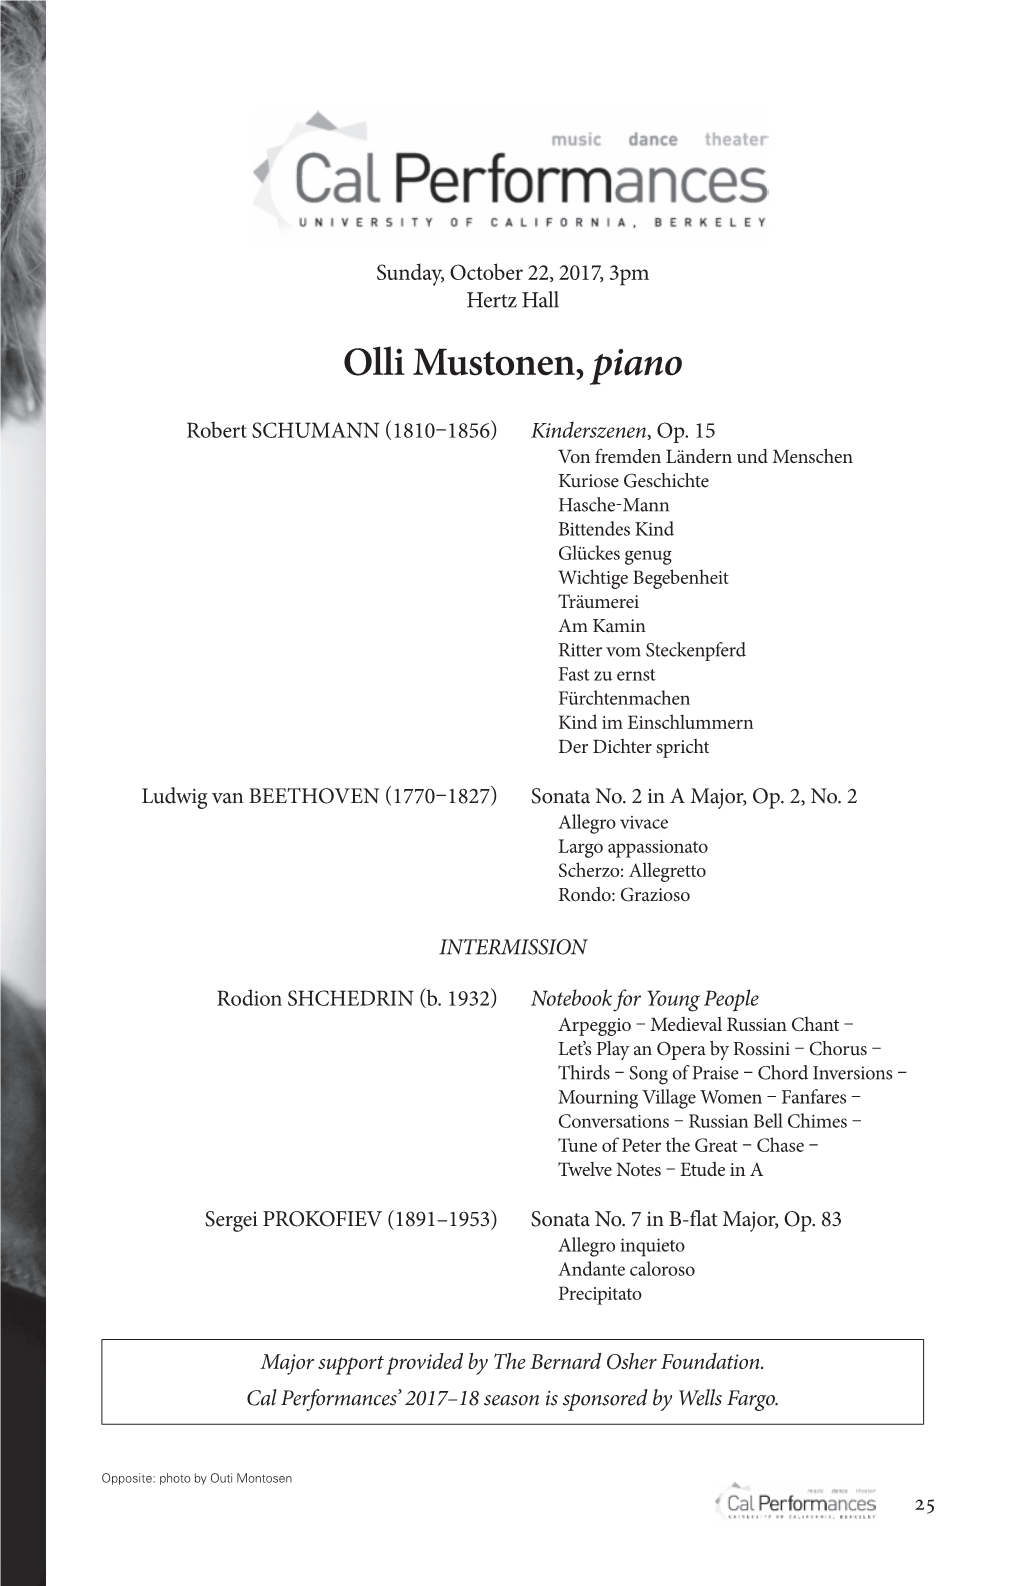 Olli Mustonen, Piano